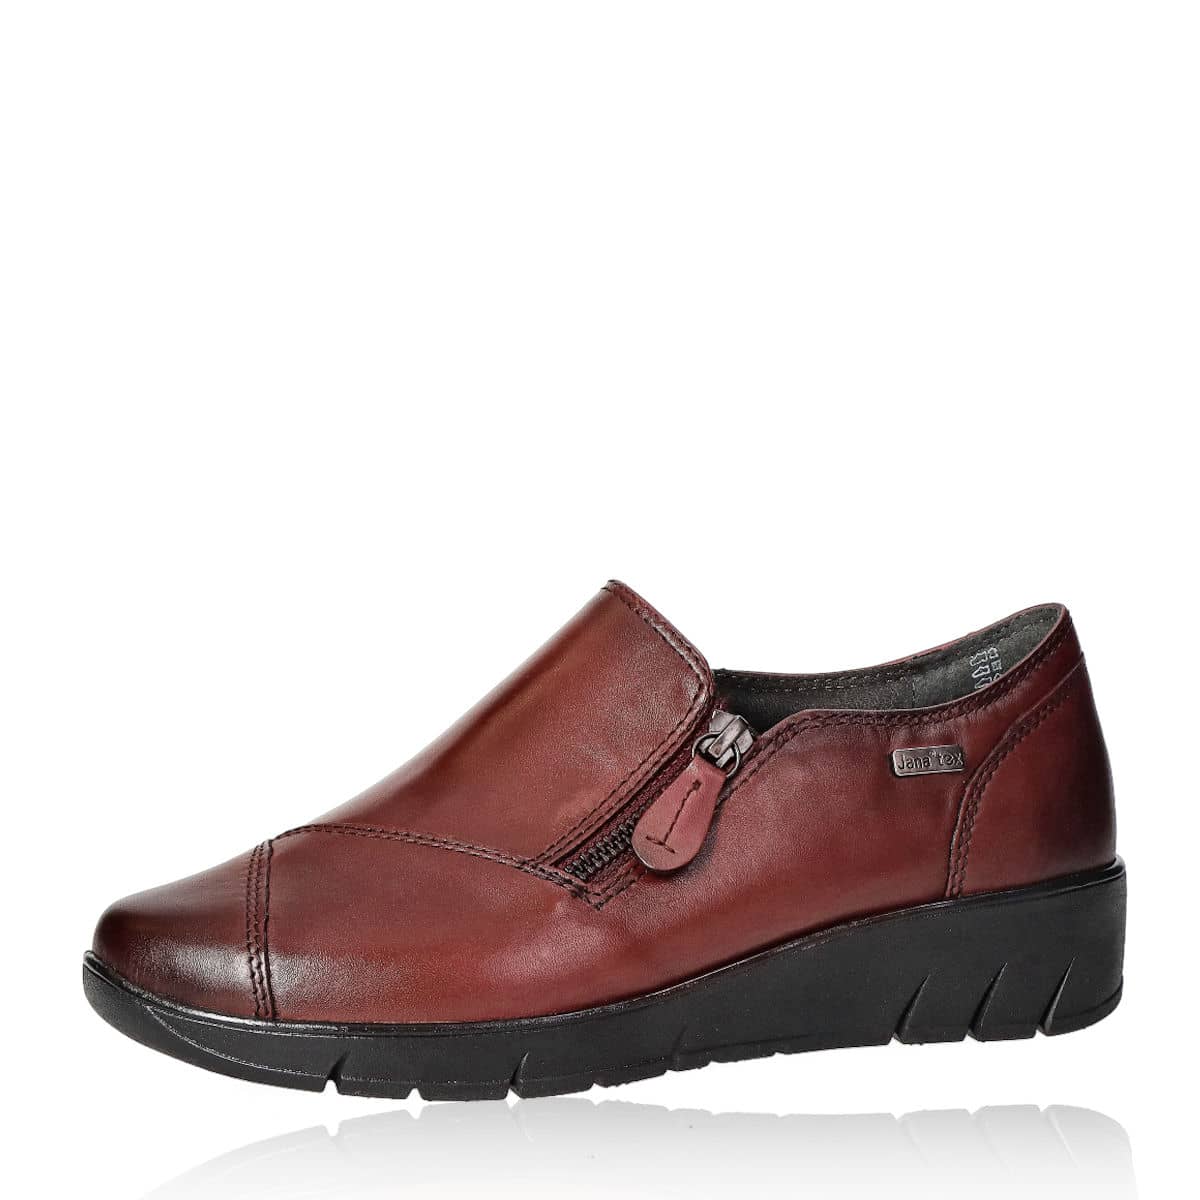 Jana women´s casual low shoes - burgundy Robel.shoes